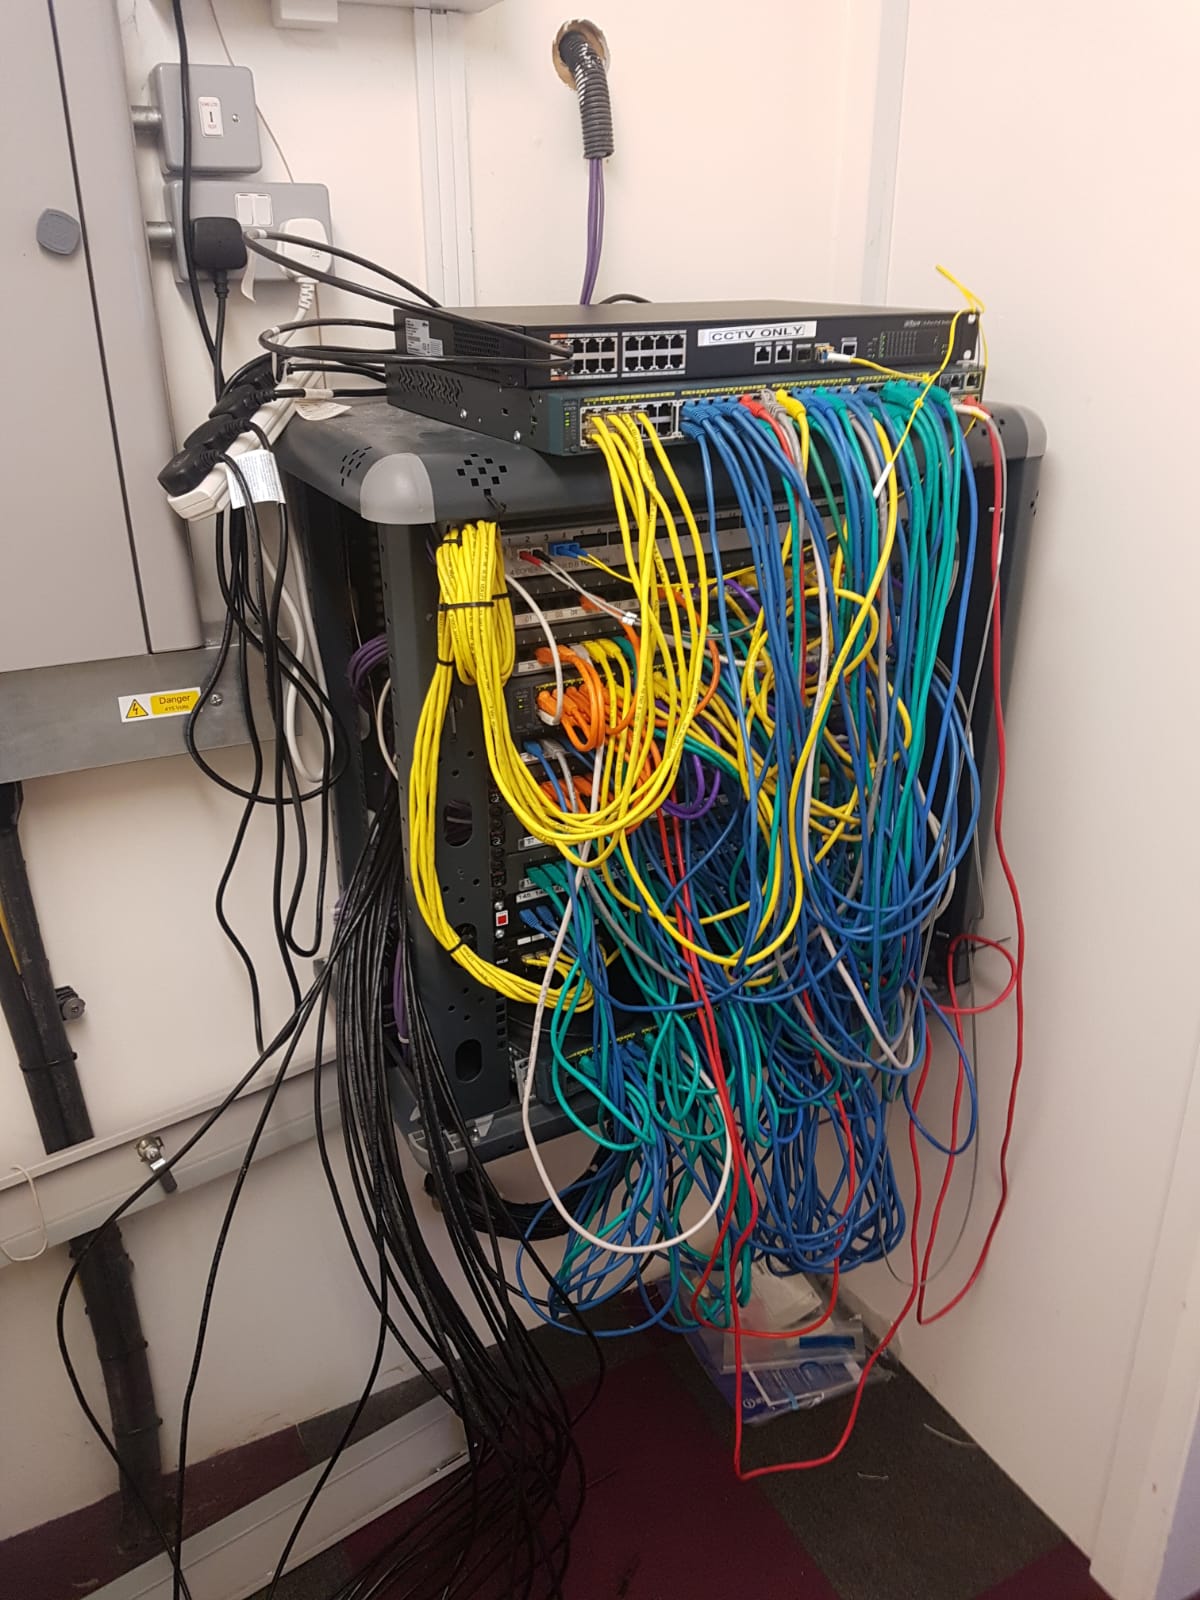 wires server box